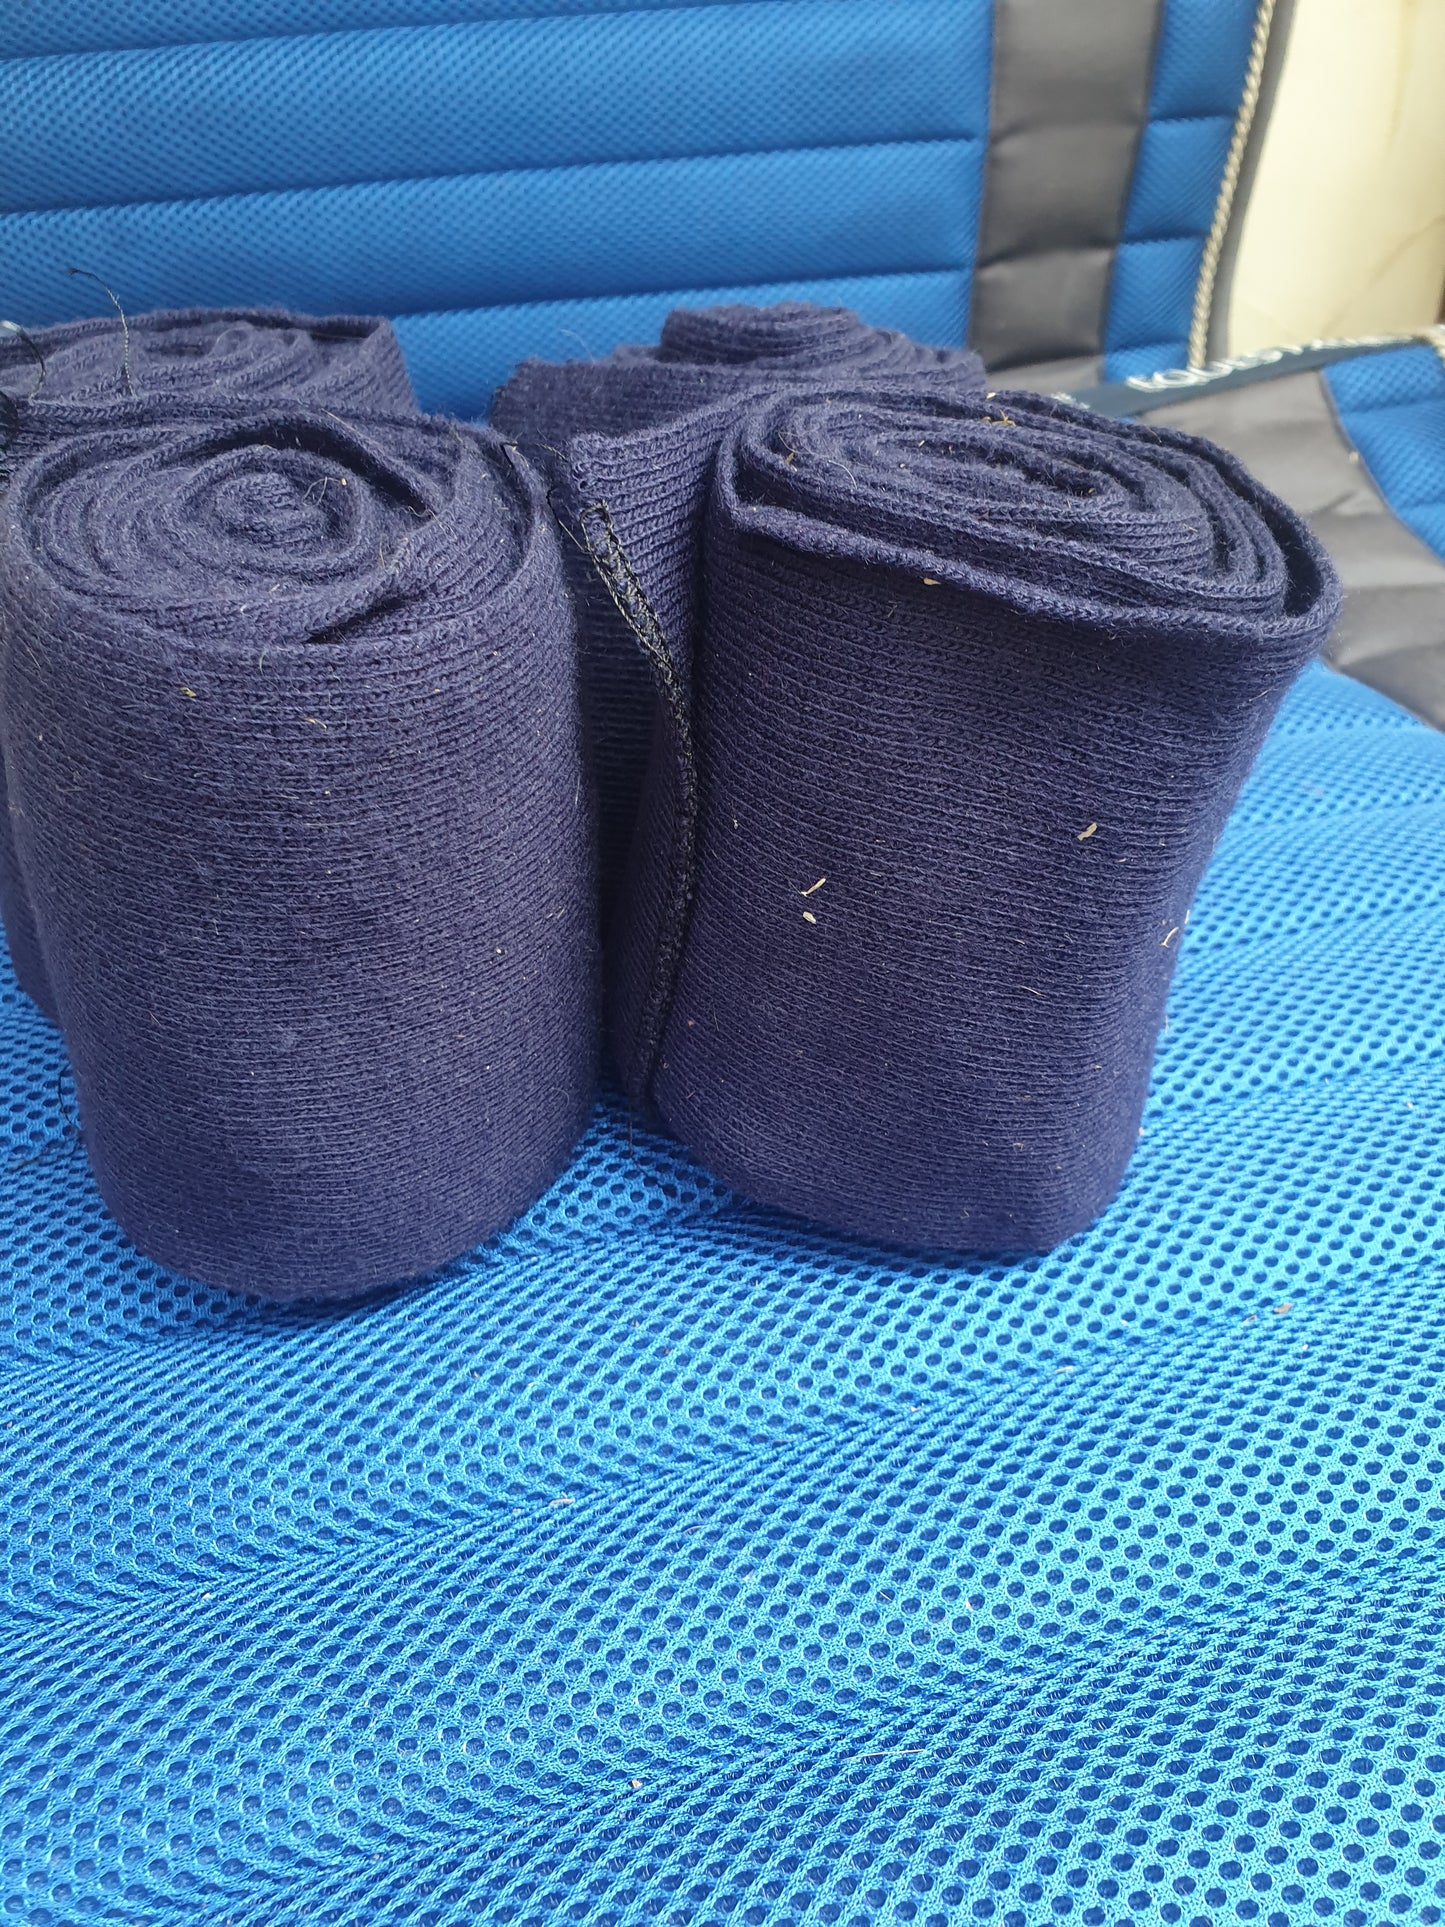 NEW Set of 4 navy blue cotton bandages FREE POSTAGE ✅